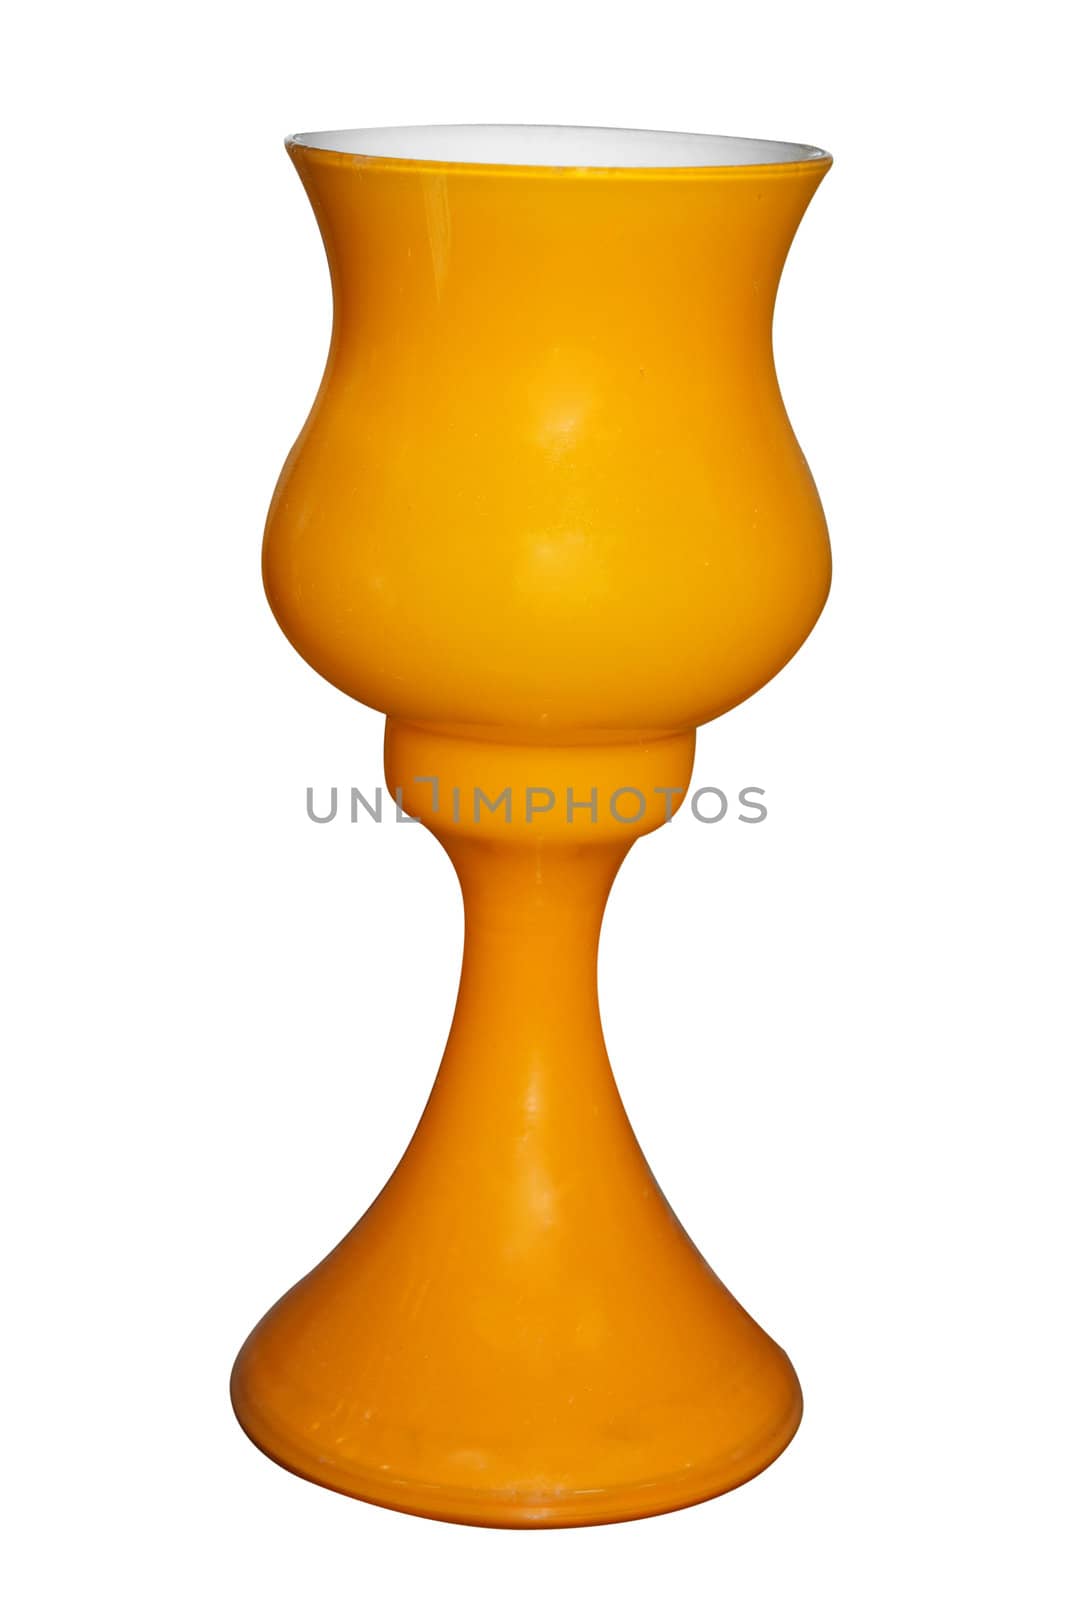 Antique Orange Glass Goblet by MargoJH